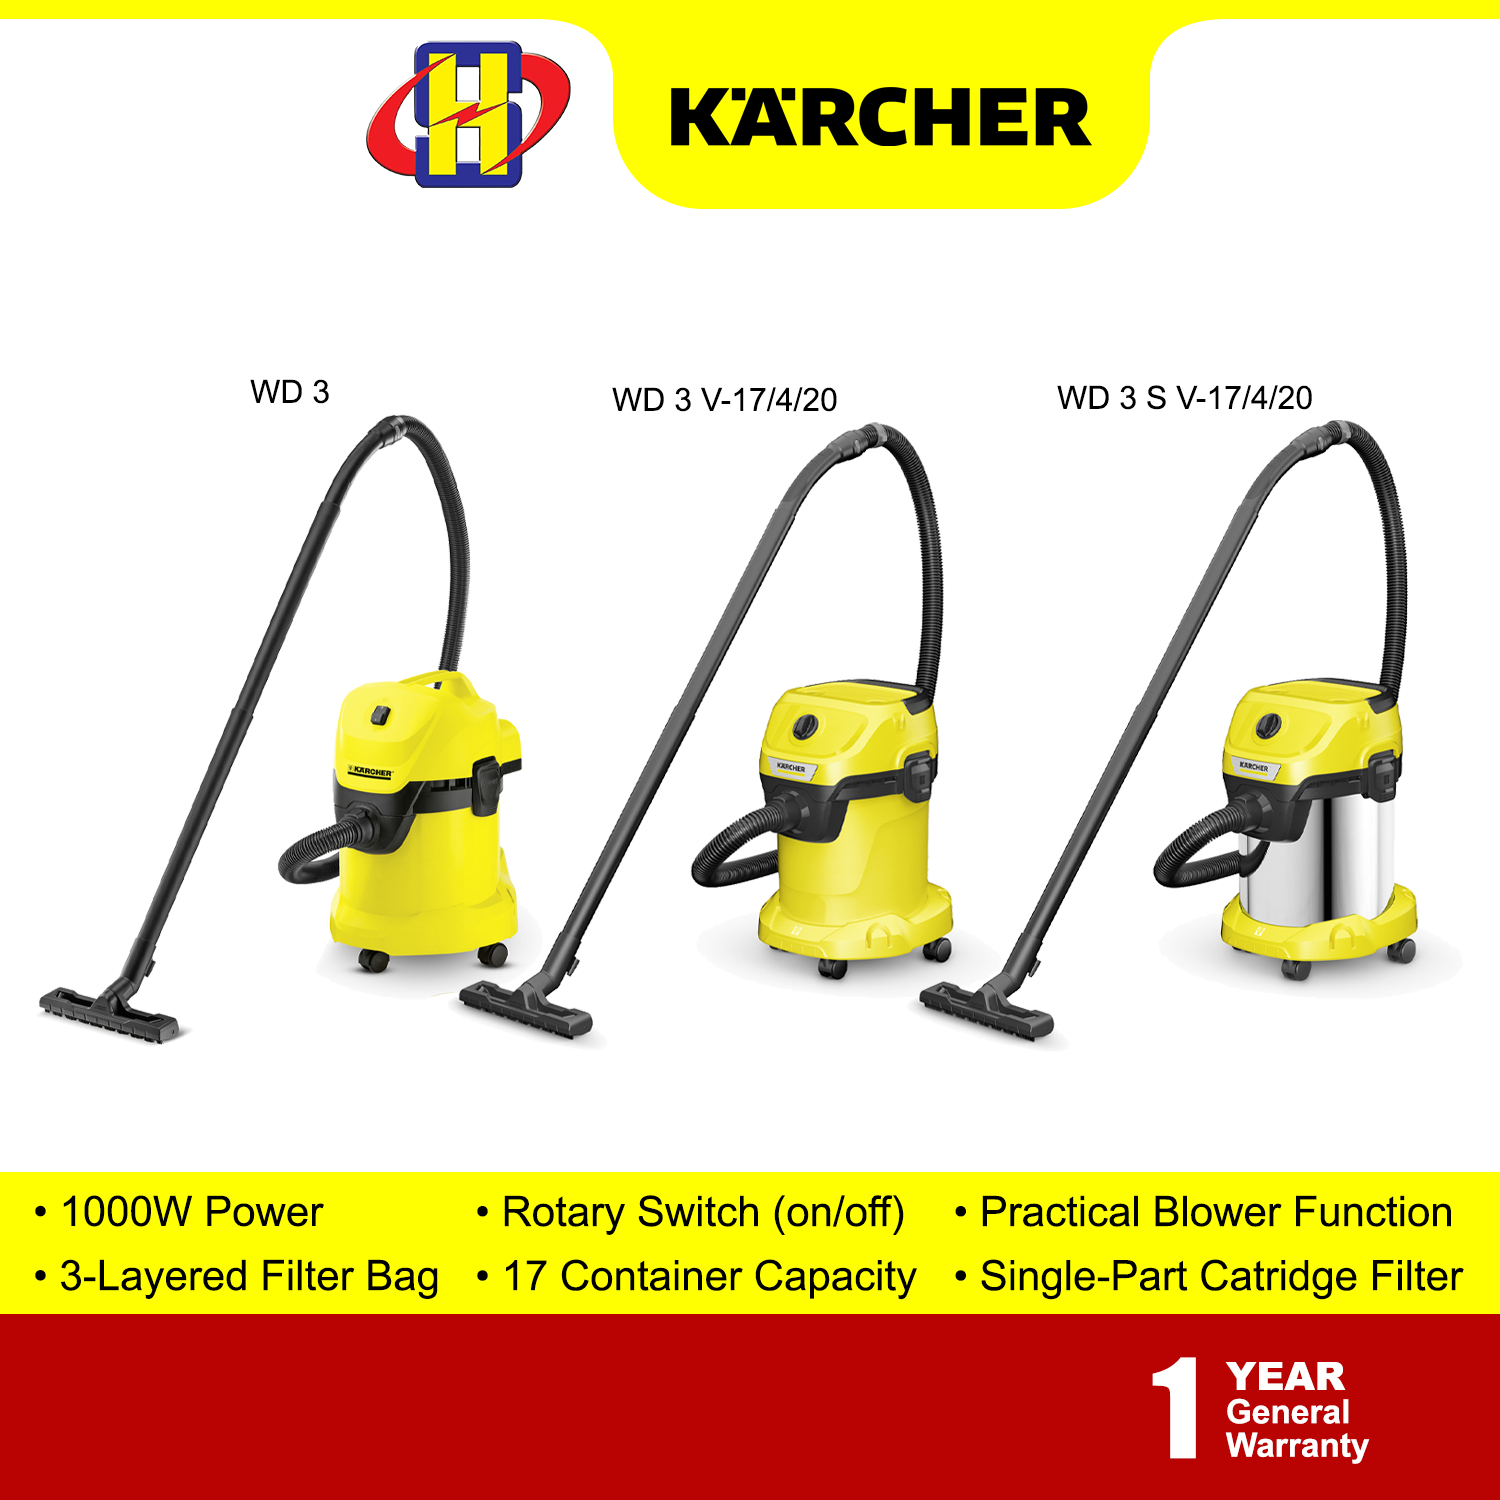 Kärcher multi-purpose vacuum cleaner WD 3 V-17/4/20